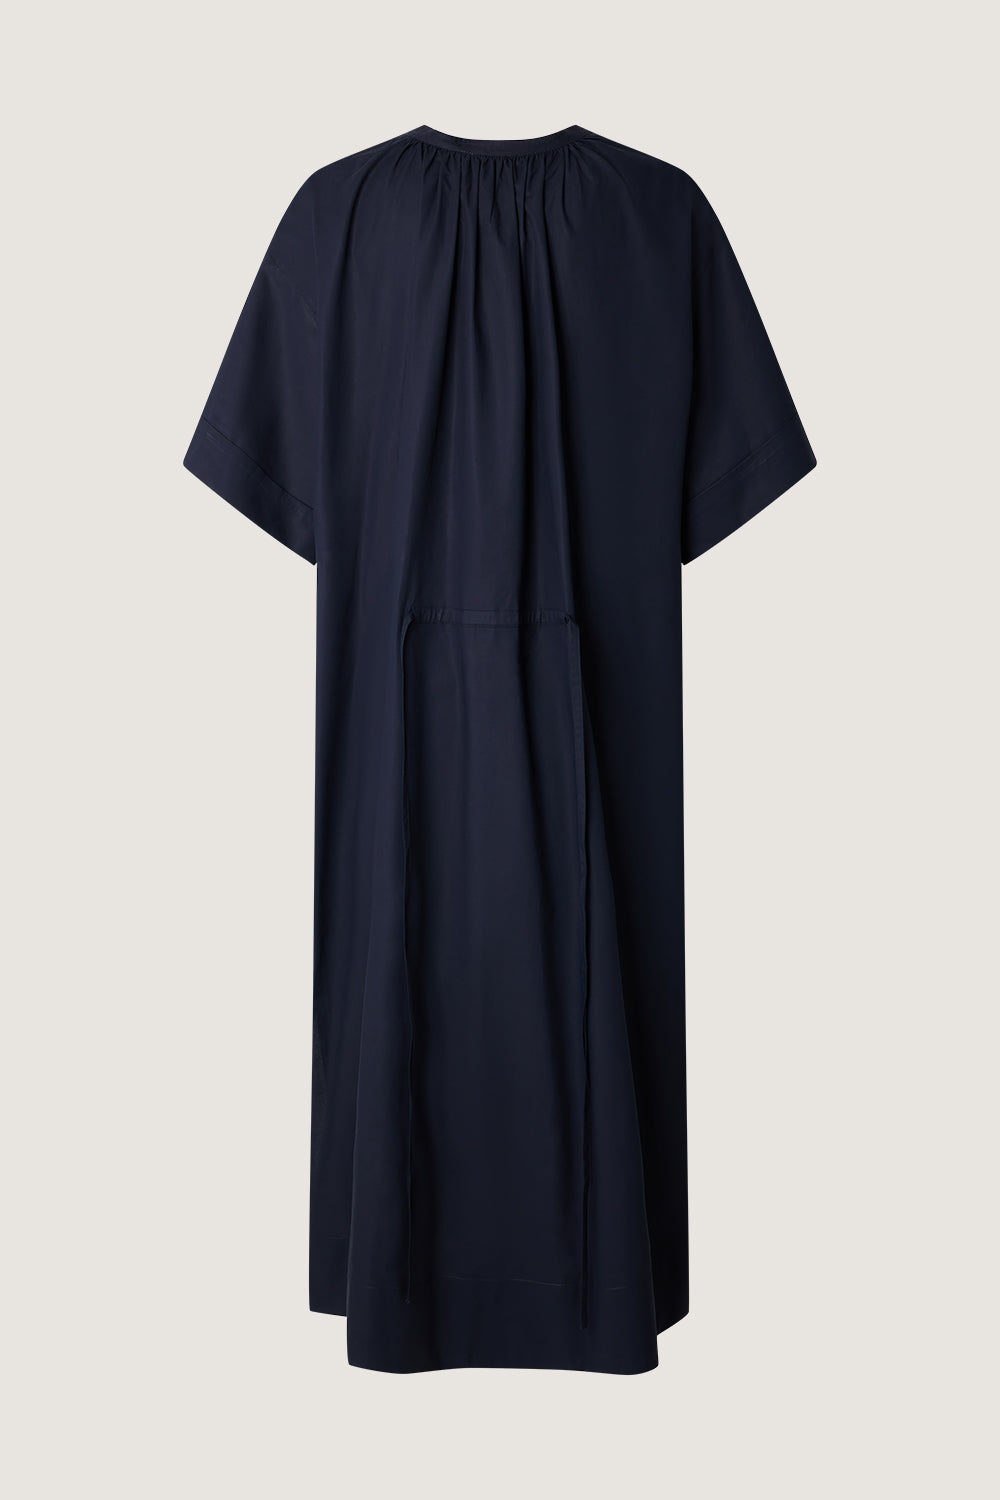 Robe Athena - Navy - Coton - Femme vue 10